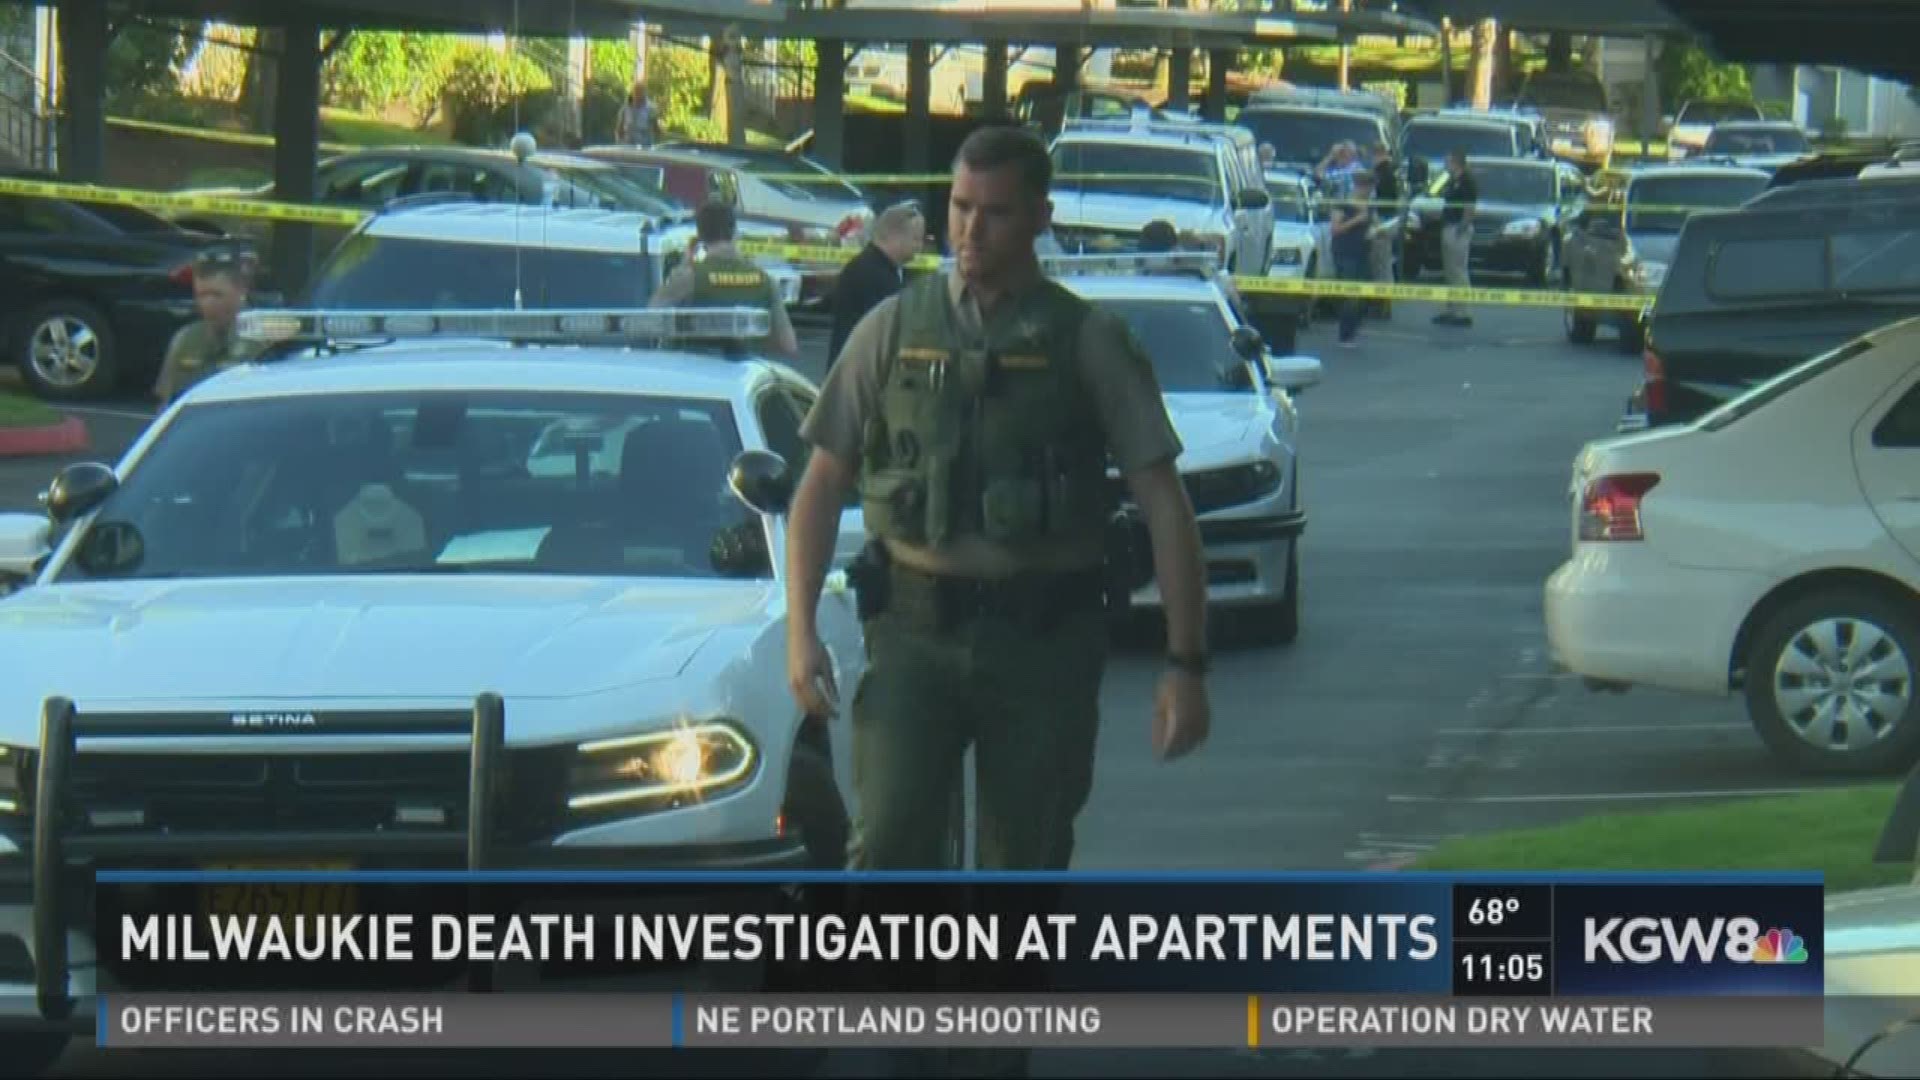 Milwaukie death investigation at apartments